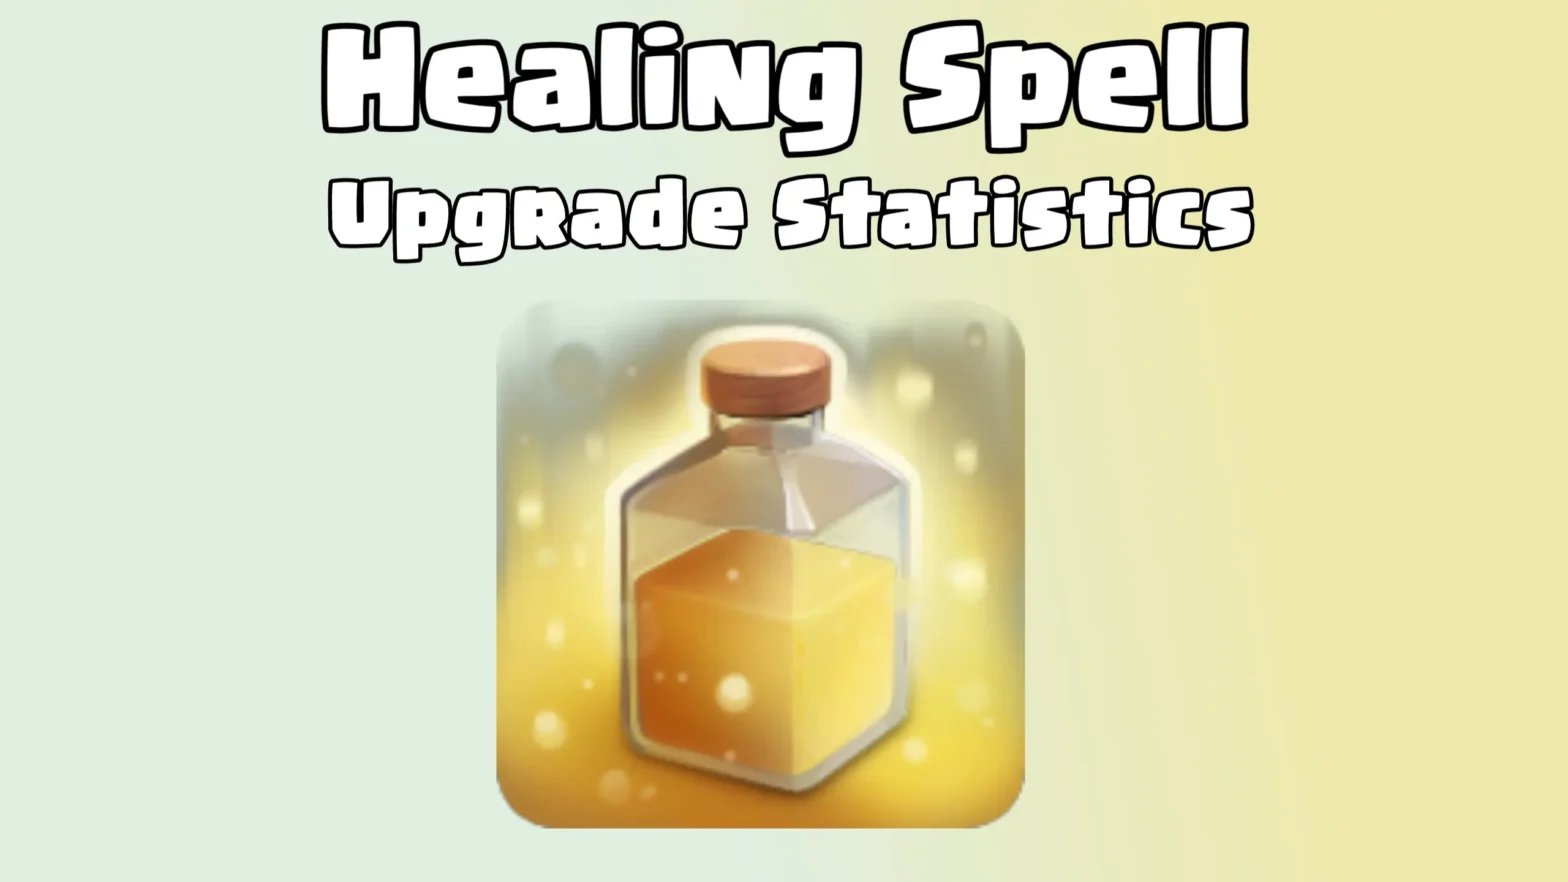 Clash of Clans: Healing Spell Upgrade Statistics